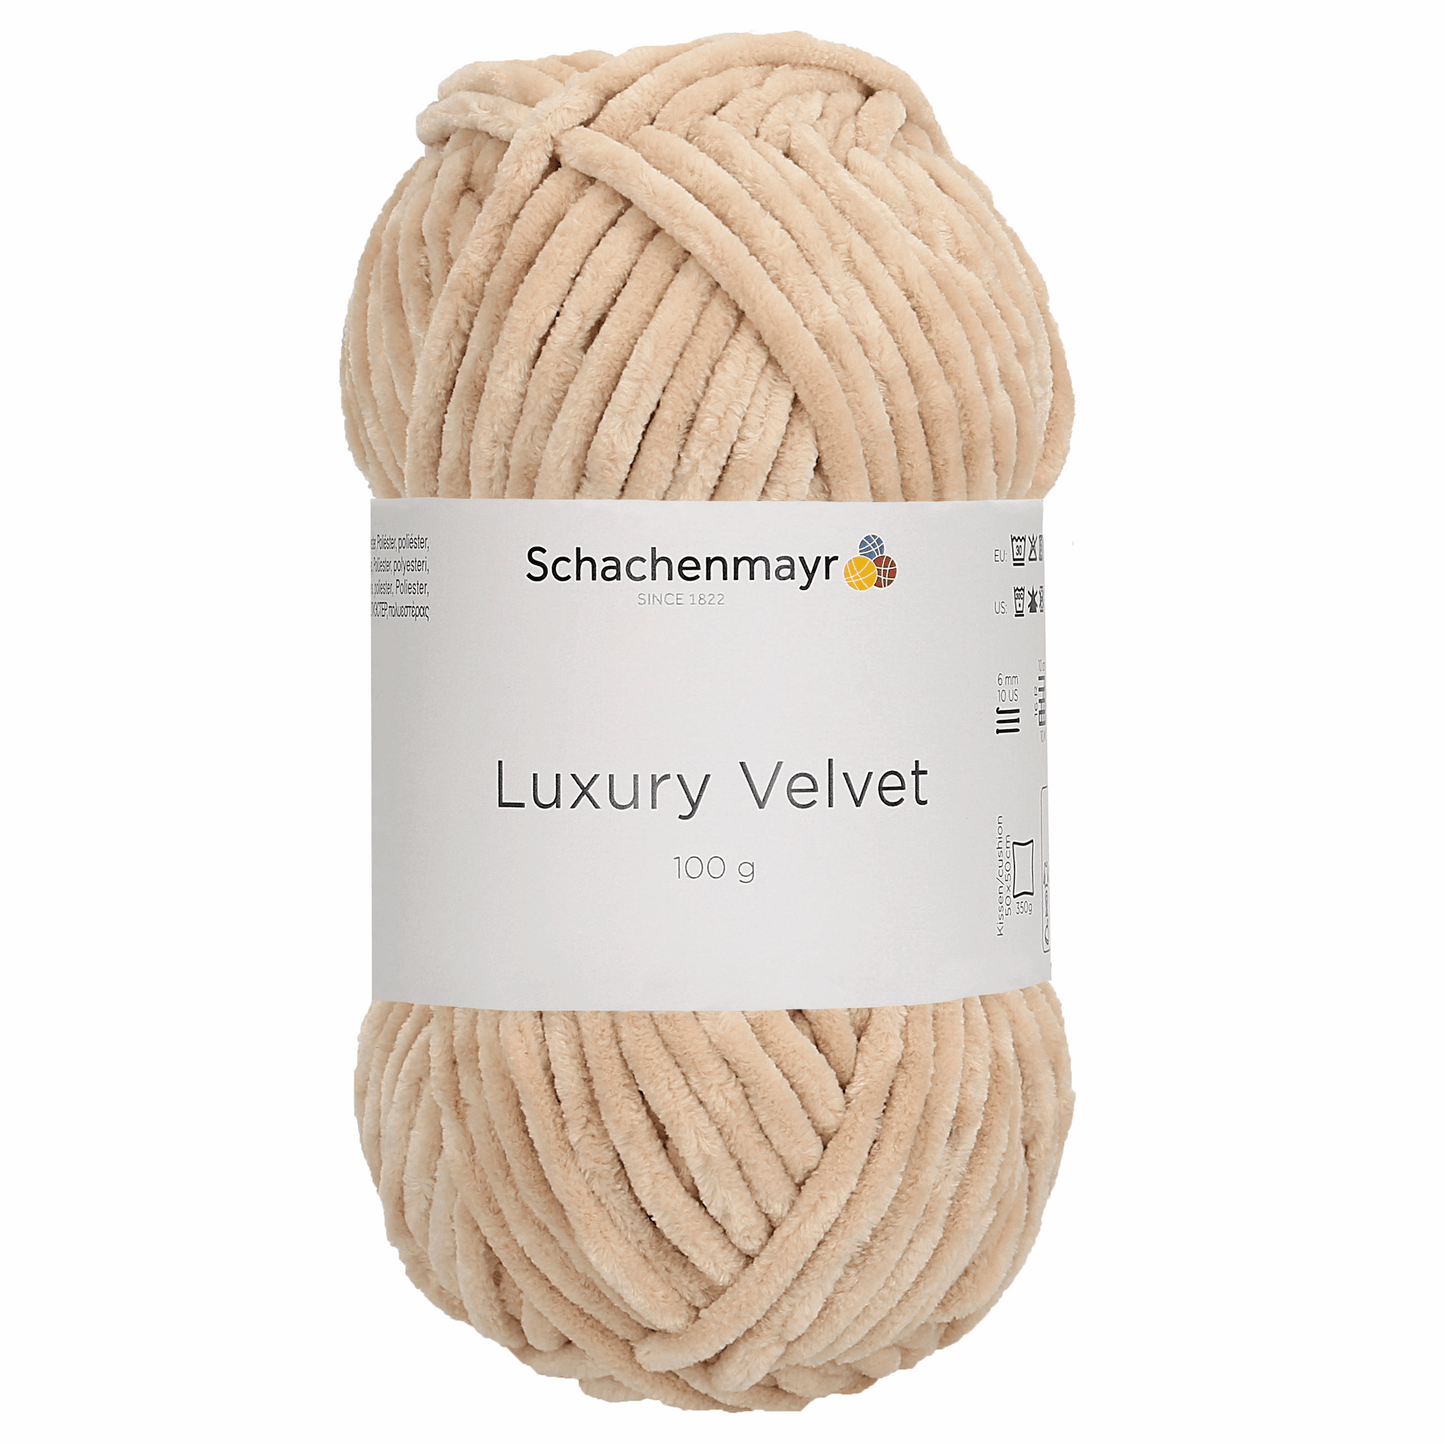 Schachenmayr Luxury Velvet 100g, 90592, color bunny 20